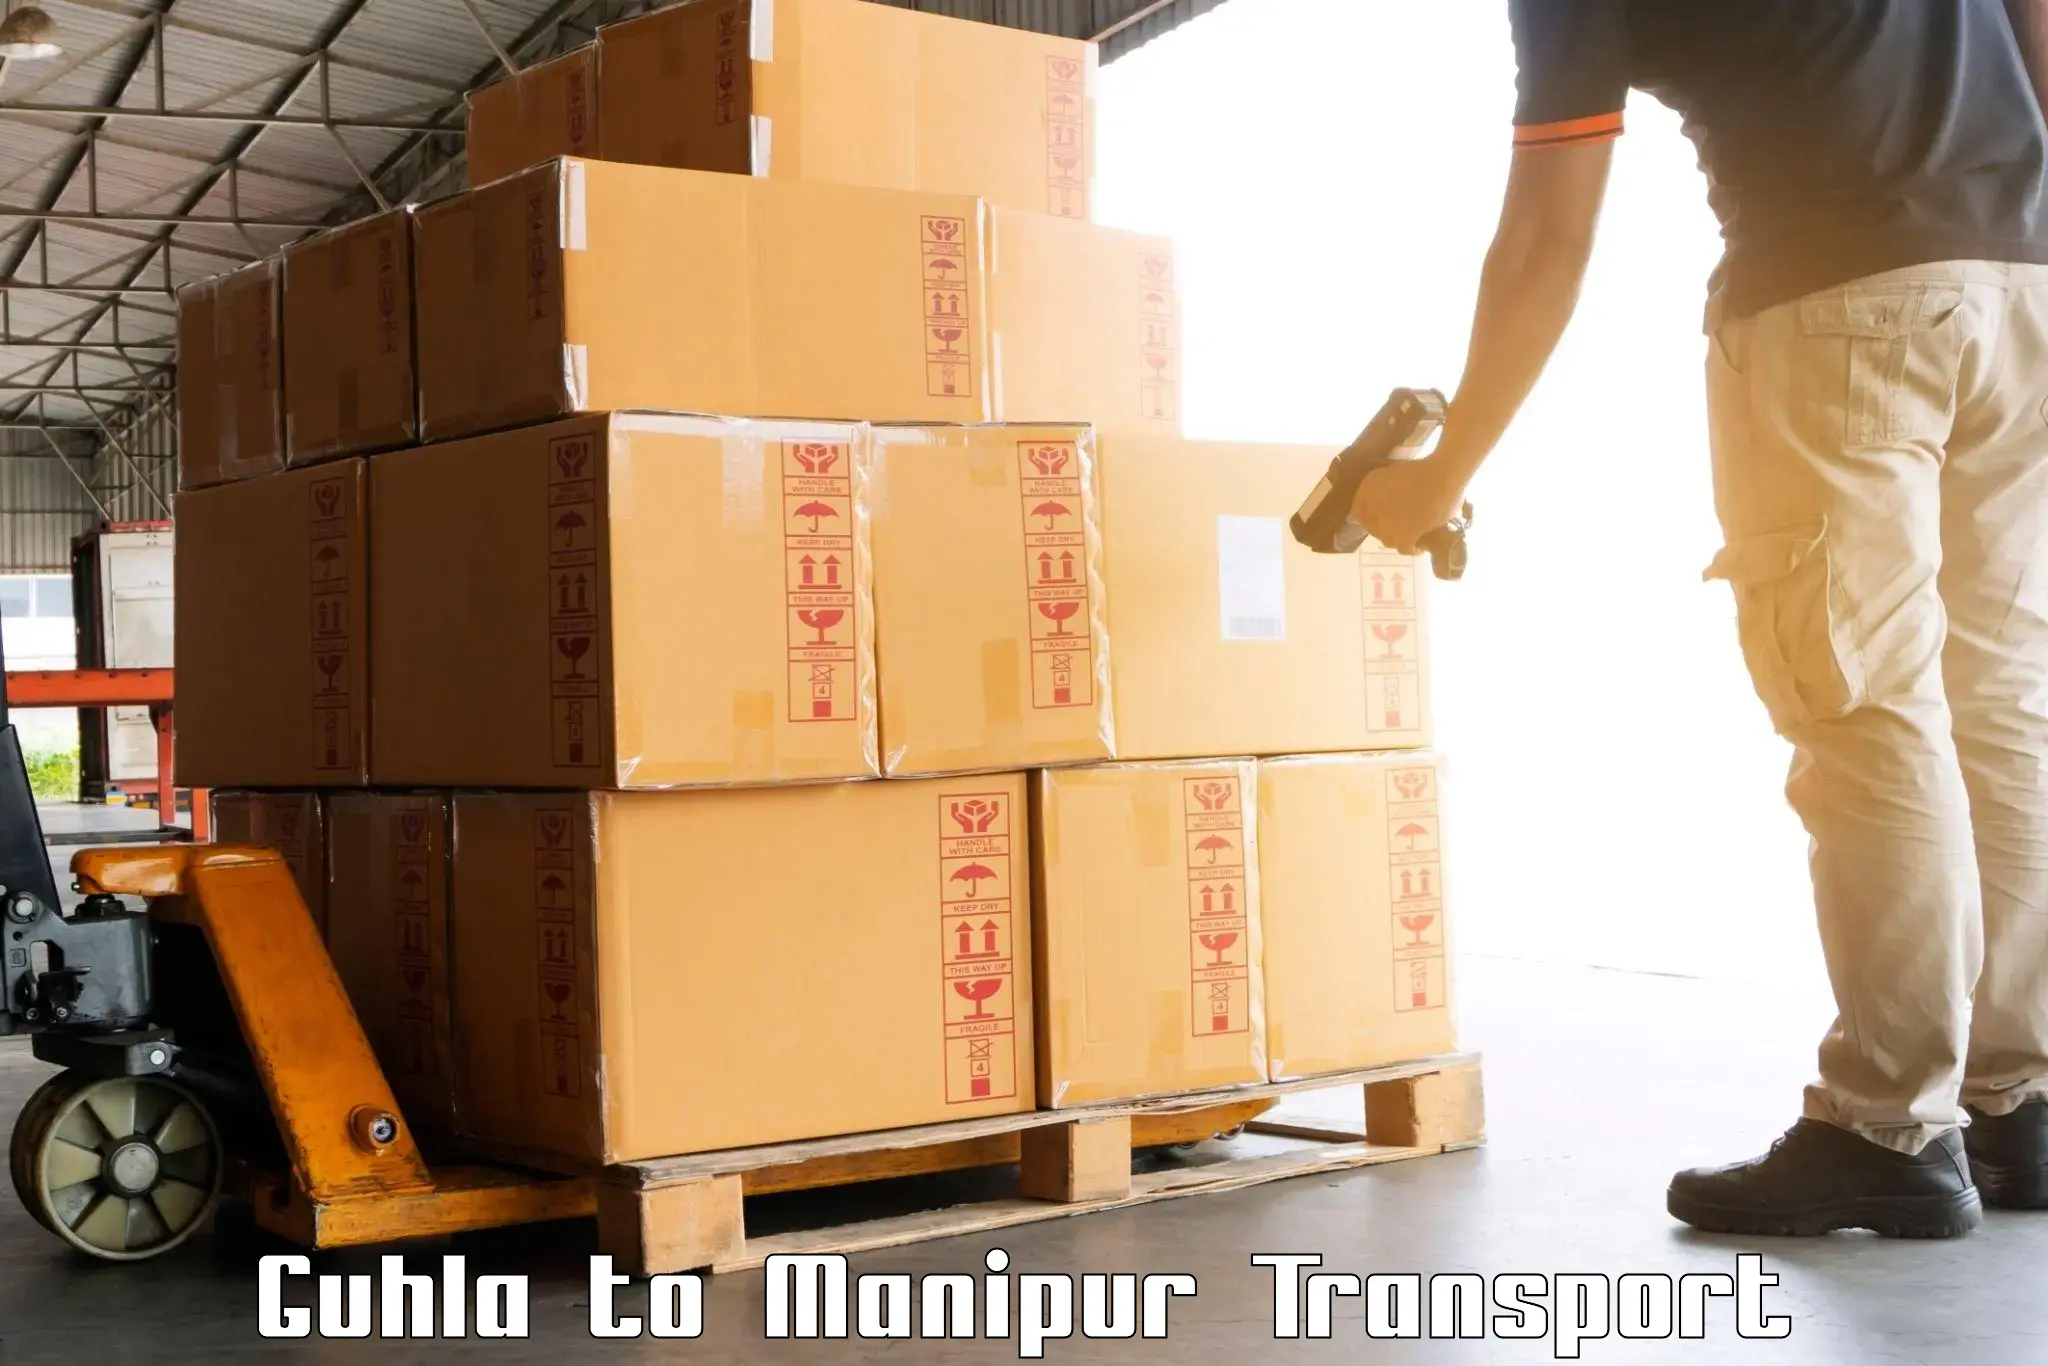 Transport in sharing in Guhla to Manipur